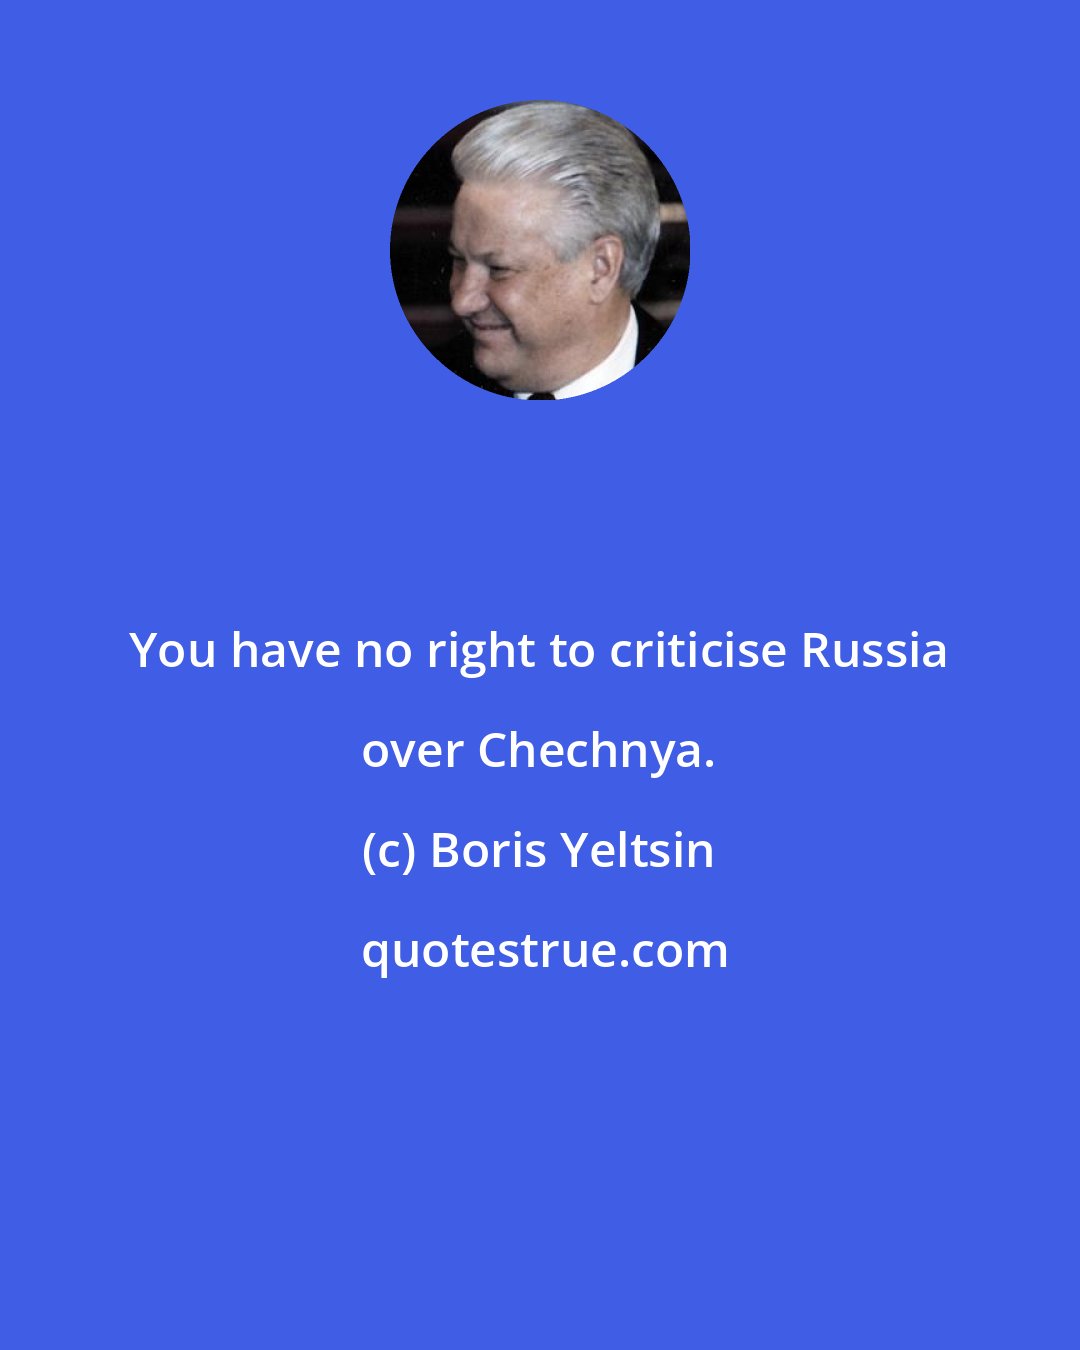 Boris Yeltsin: You have no right to criticise Russia over Chechnya.